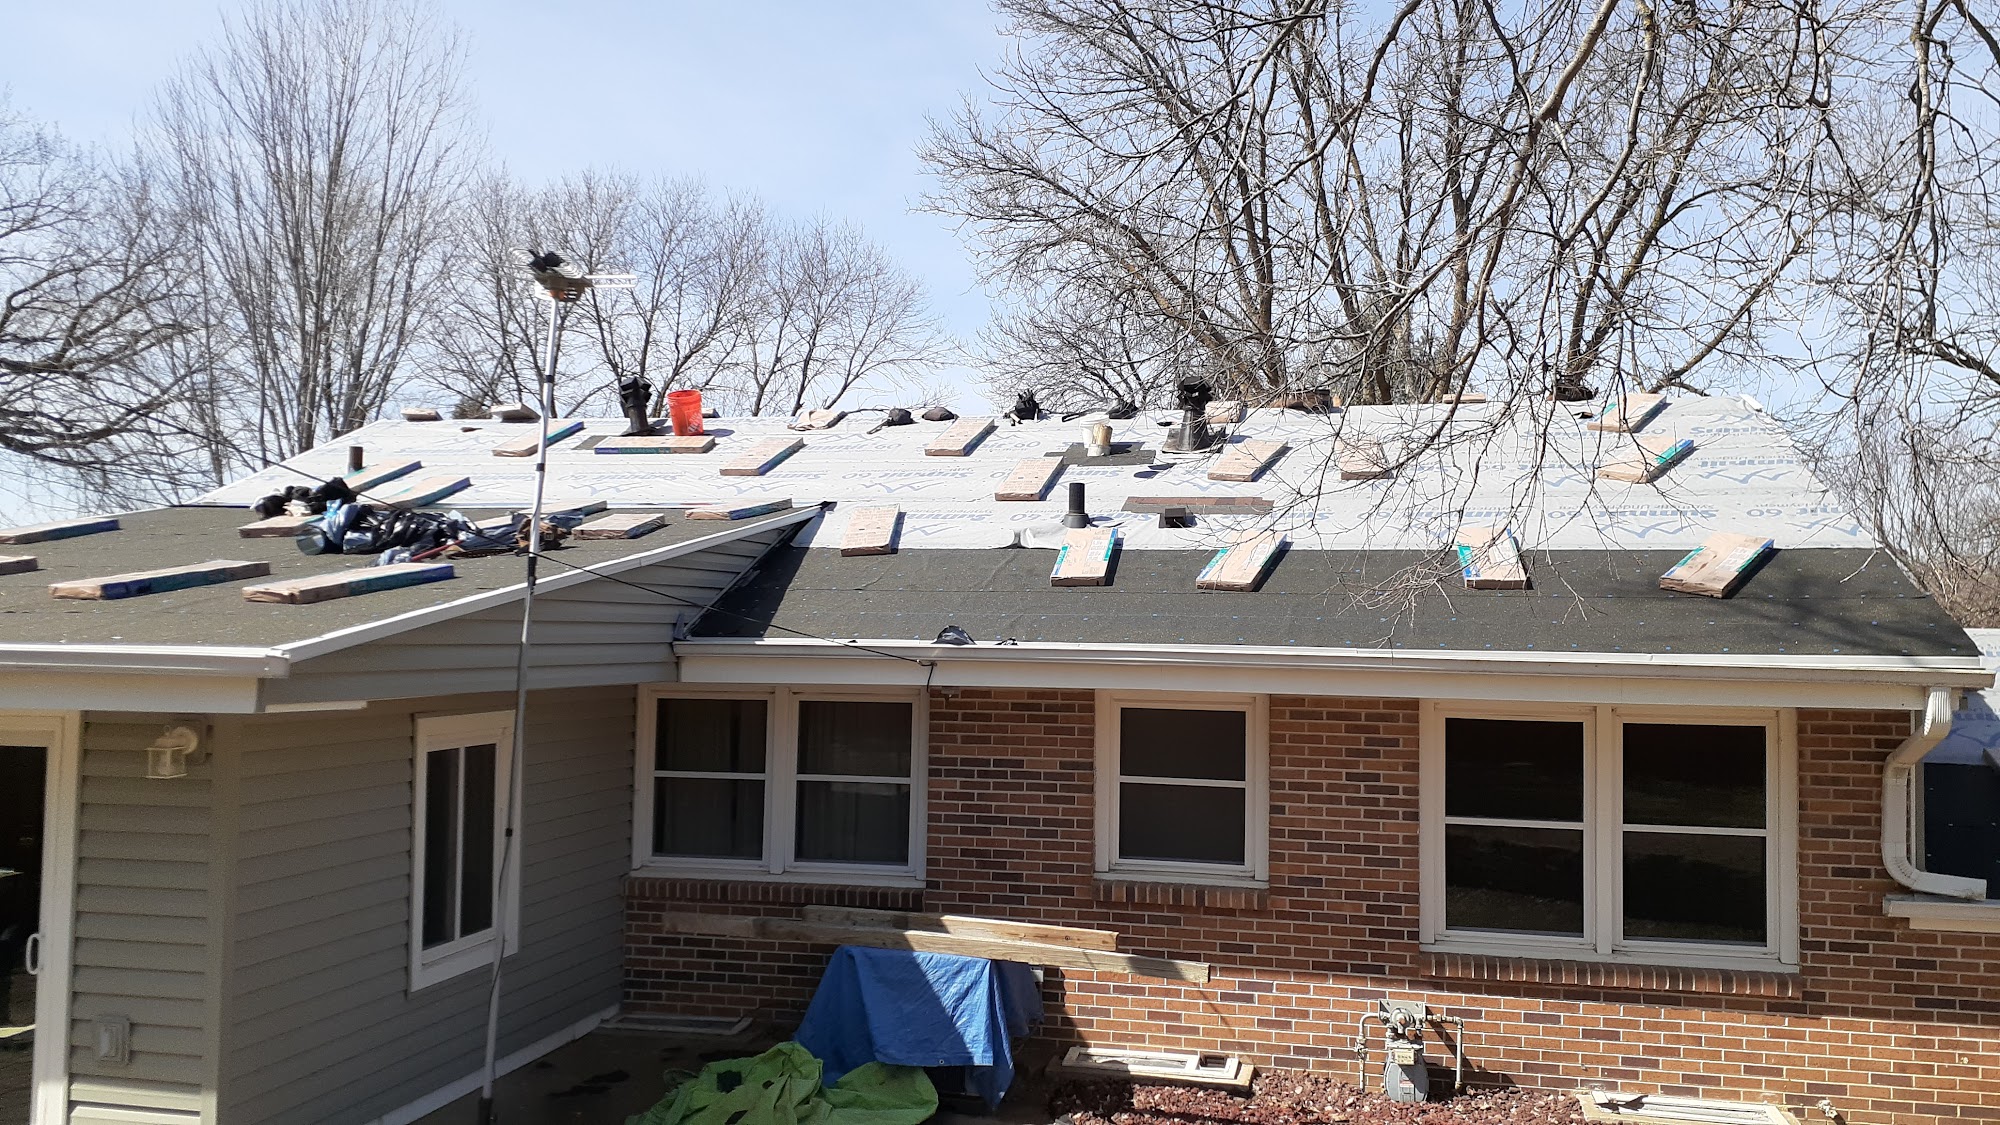 Steve's Roofing Company 529 W 10th St, South Sioux City Nebraska 68776